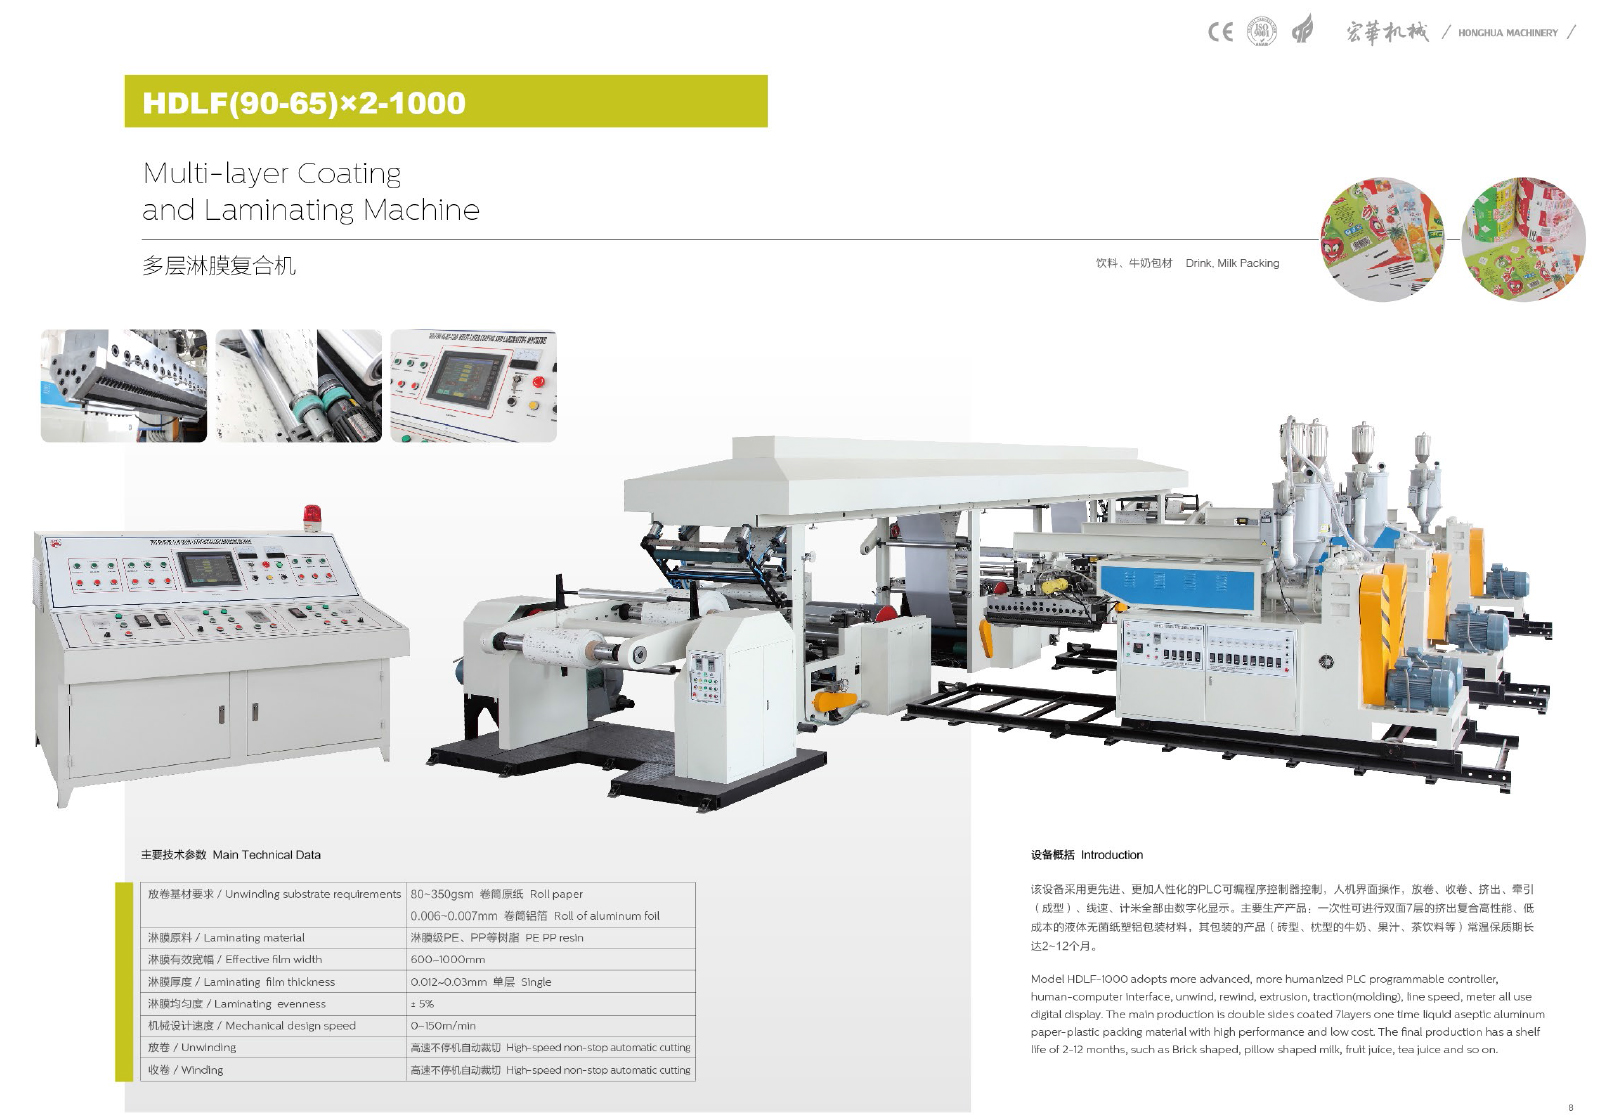 HDLF(90-65)×2-1000 Multi-layer Coating and Laminating Machine